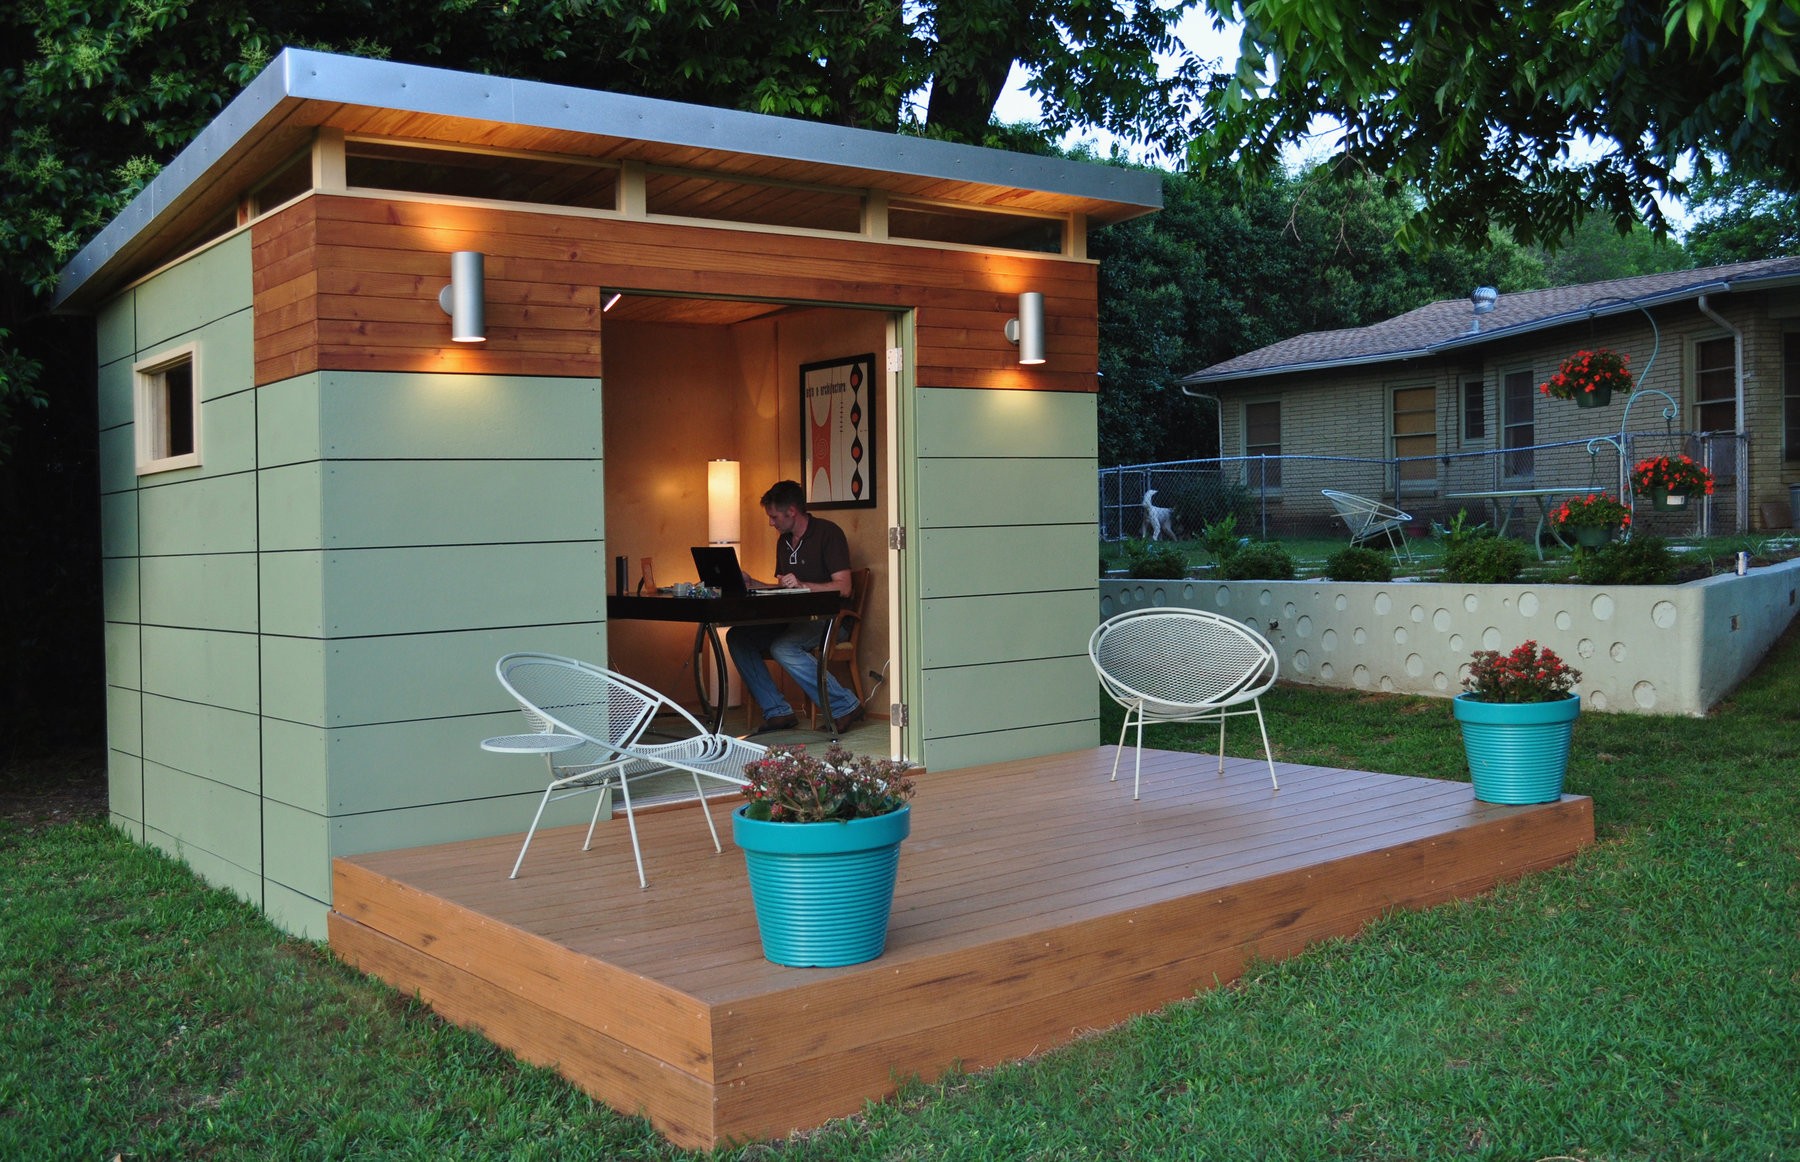 best wooden outdoor playhouse